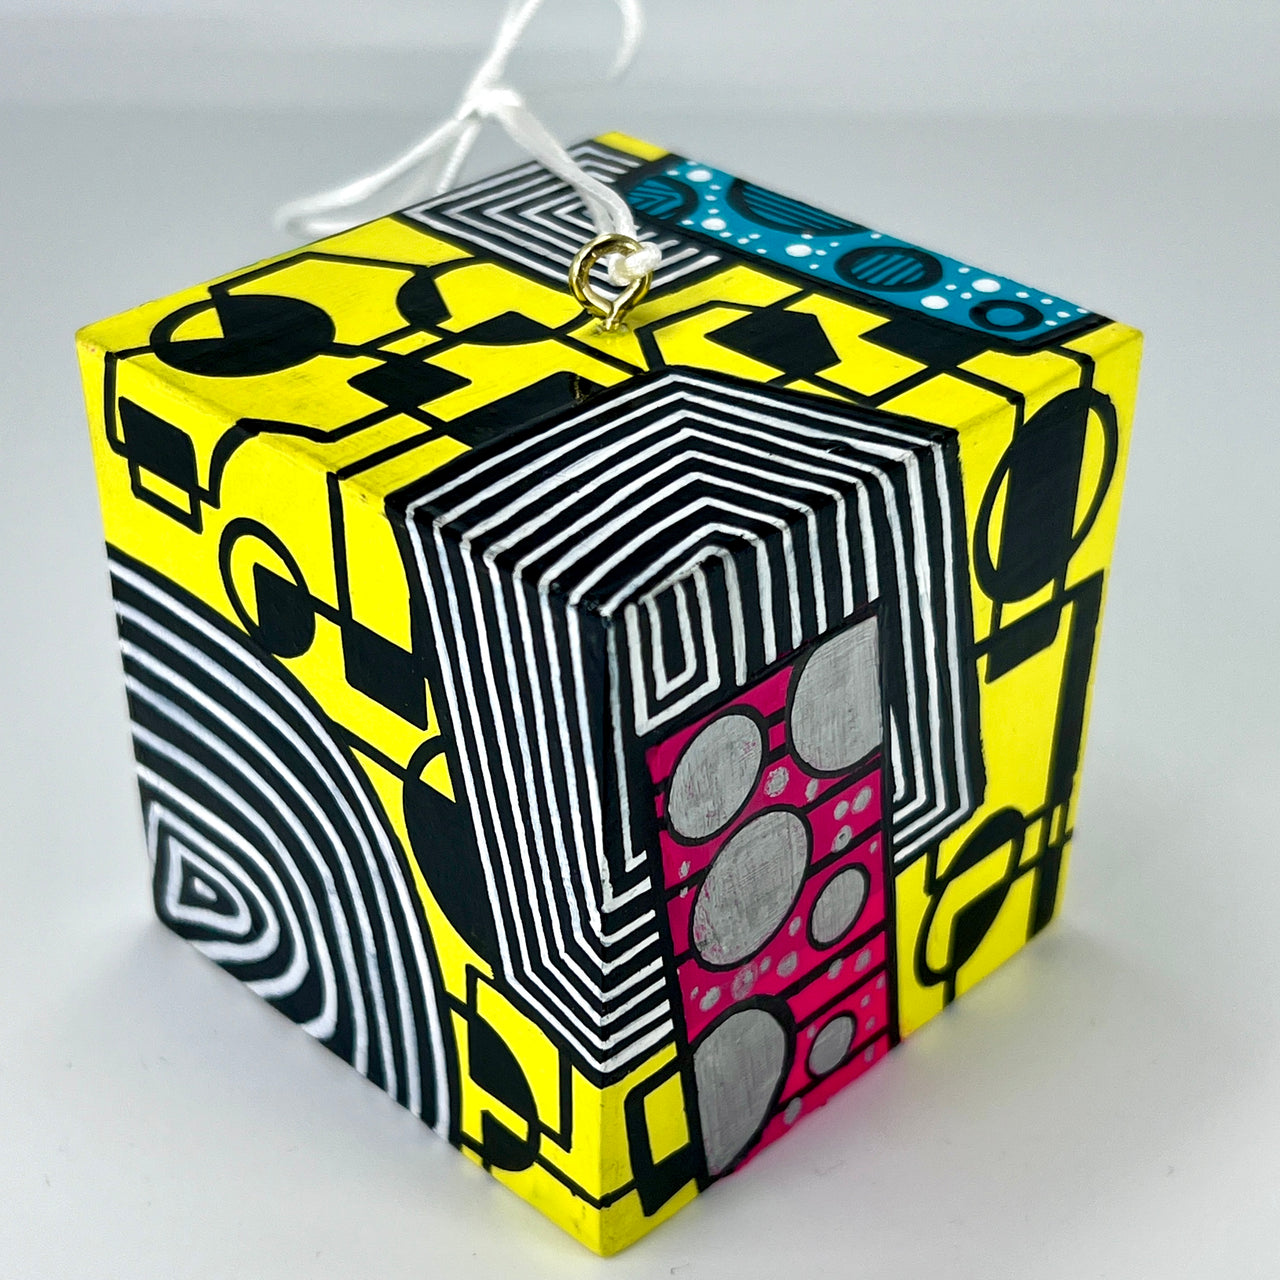 #15 - 3D Cube Art - 2.25" cube